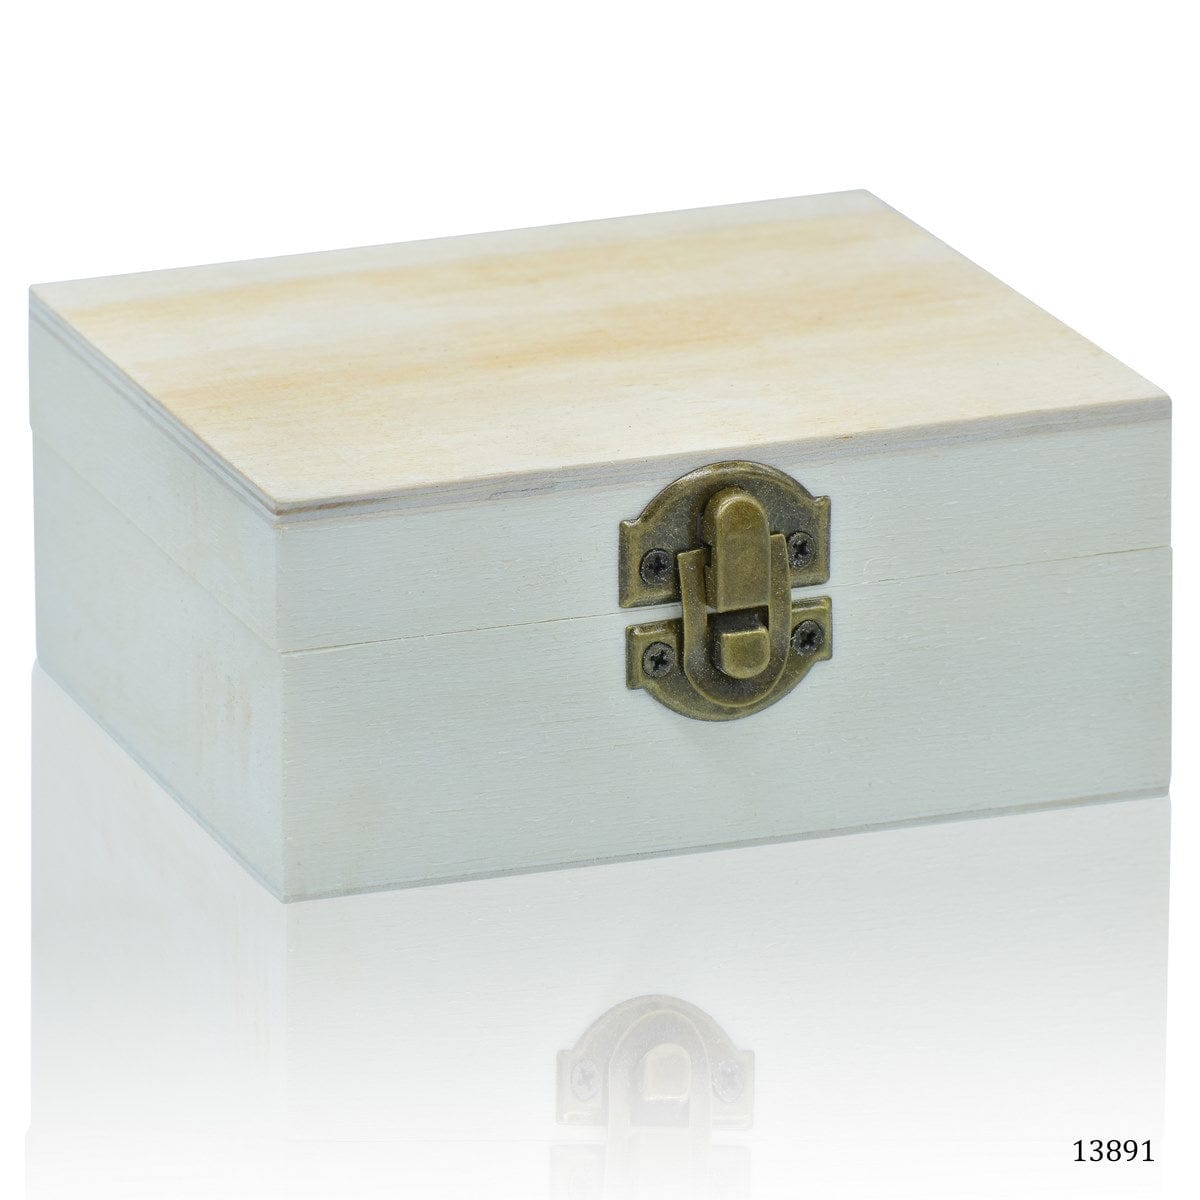 jags-mumbai Wooden & Plastic Box Wooden Empty Box Small Rectangle Shape 13891